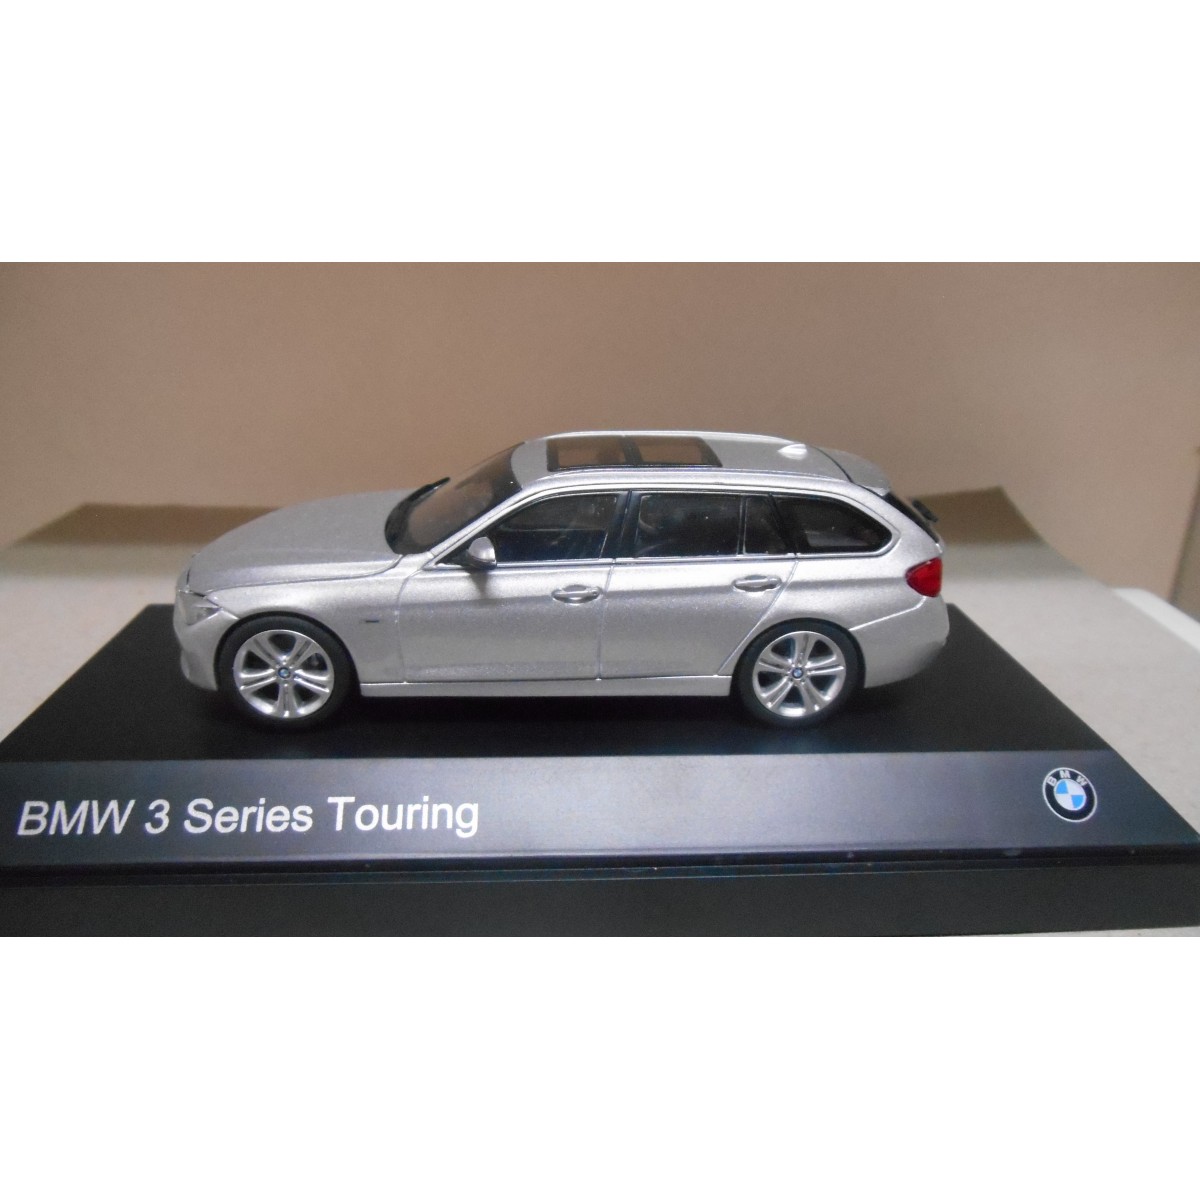 BMW F31 3 SERIES TOURING SILVER 1:43 DEALER PARAGON - BCN STOCK CARS